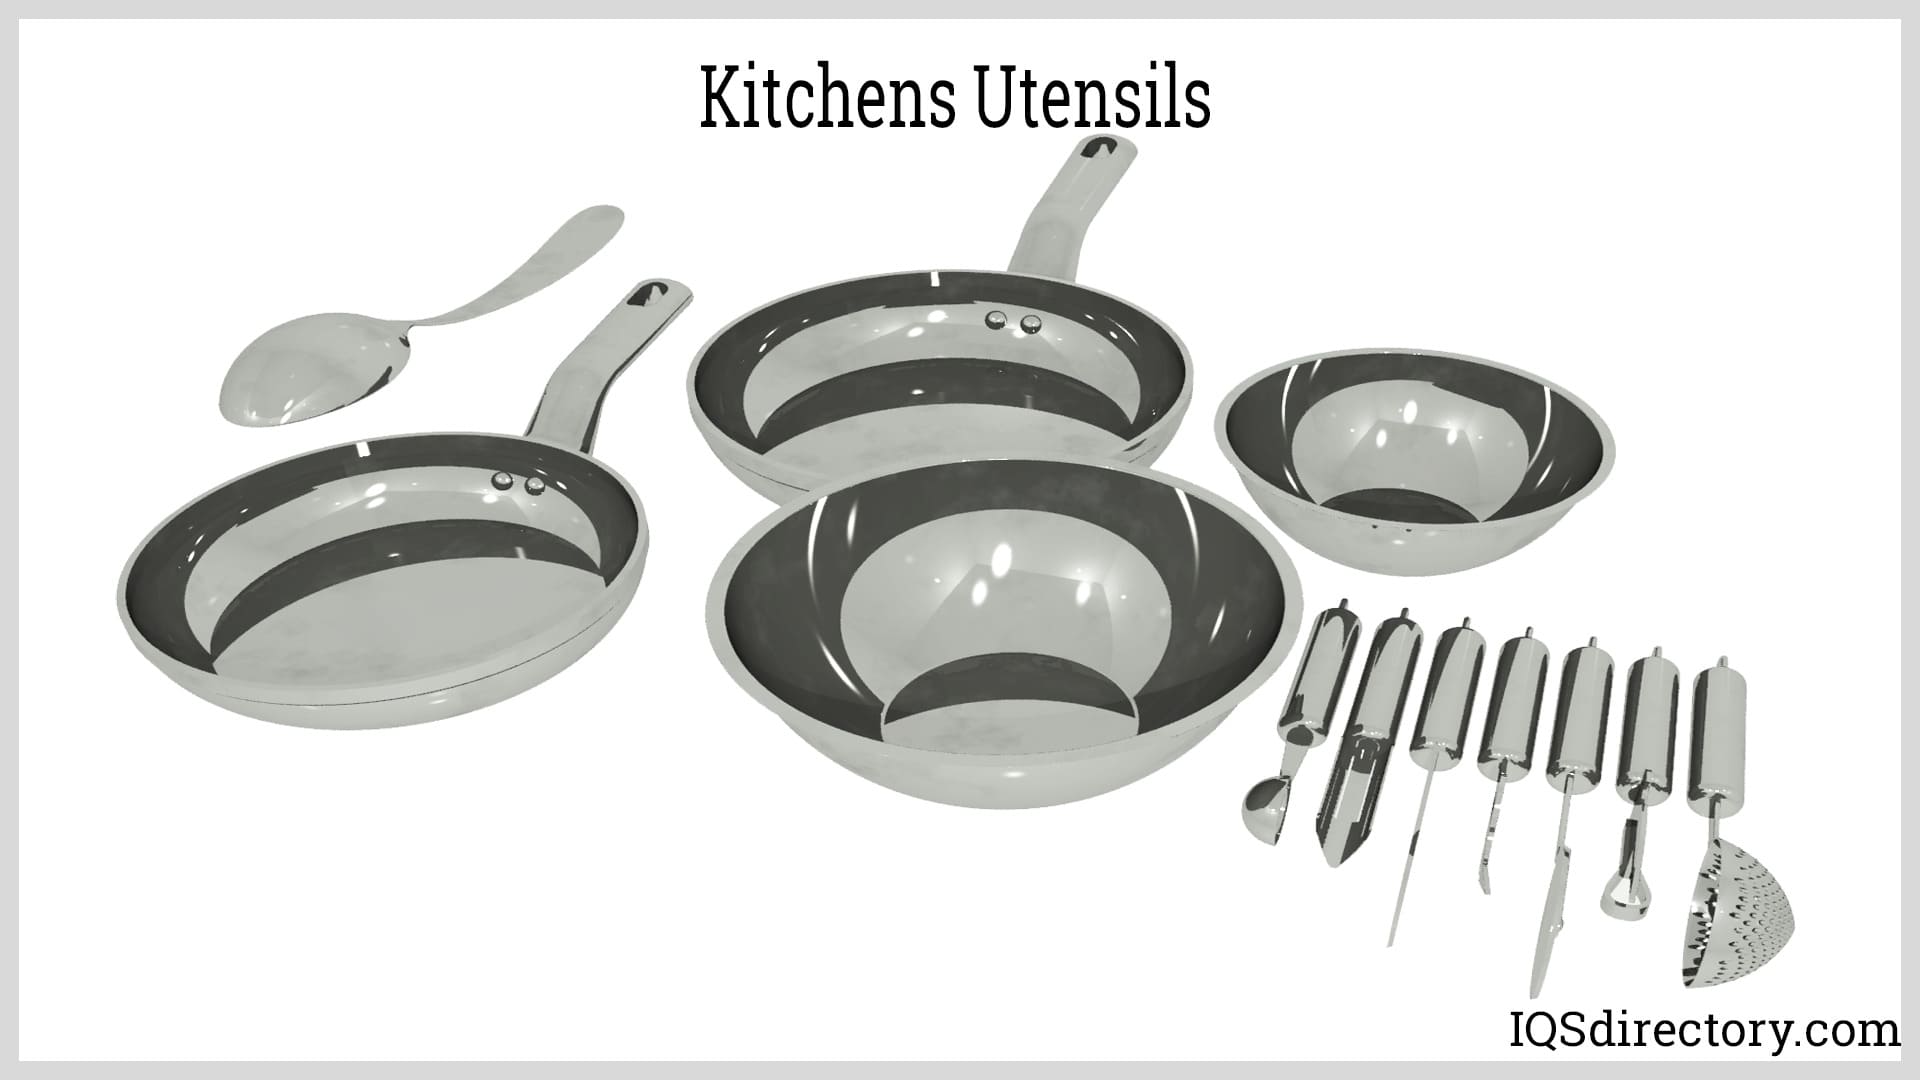 Kitchens Utensils